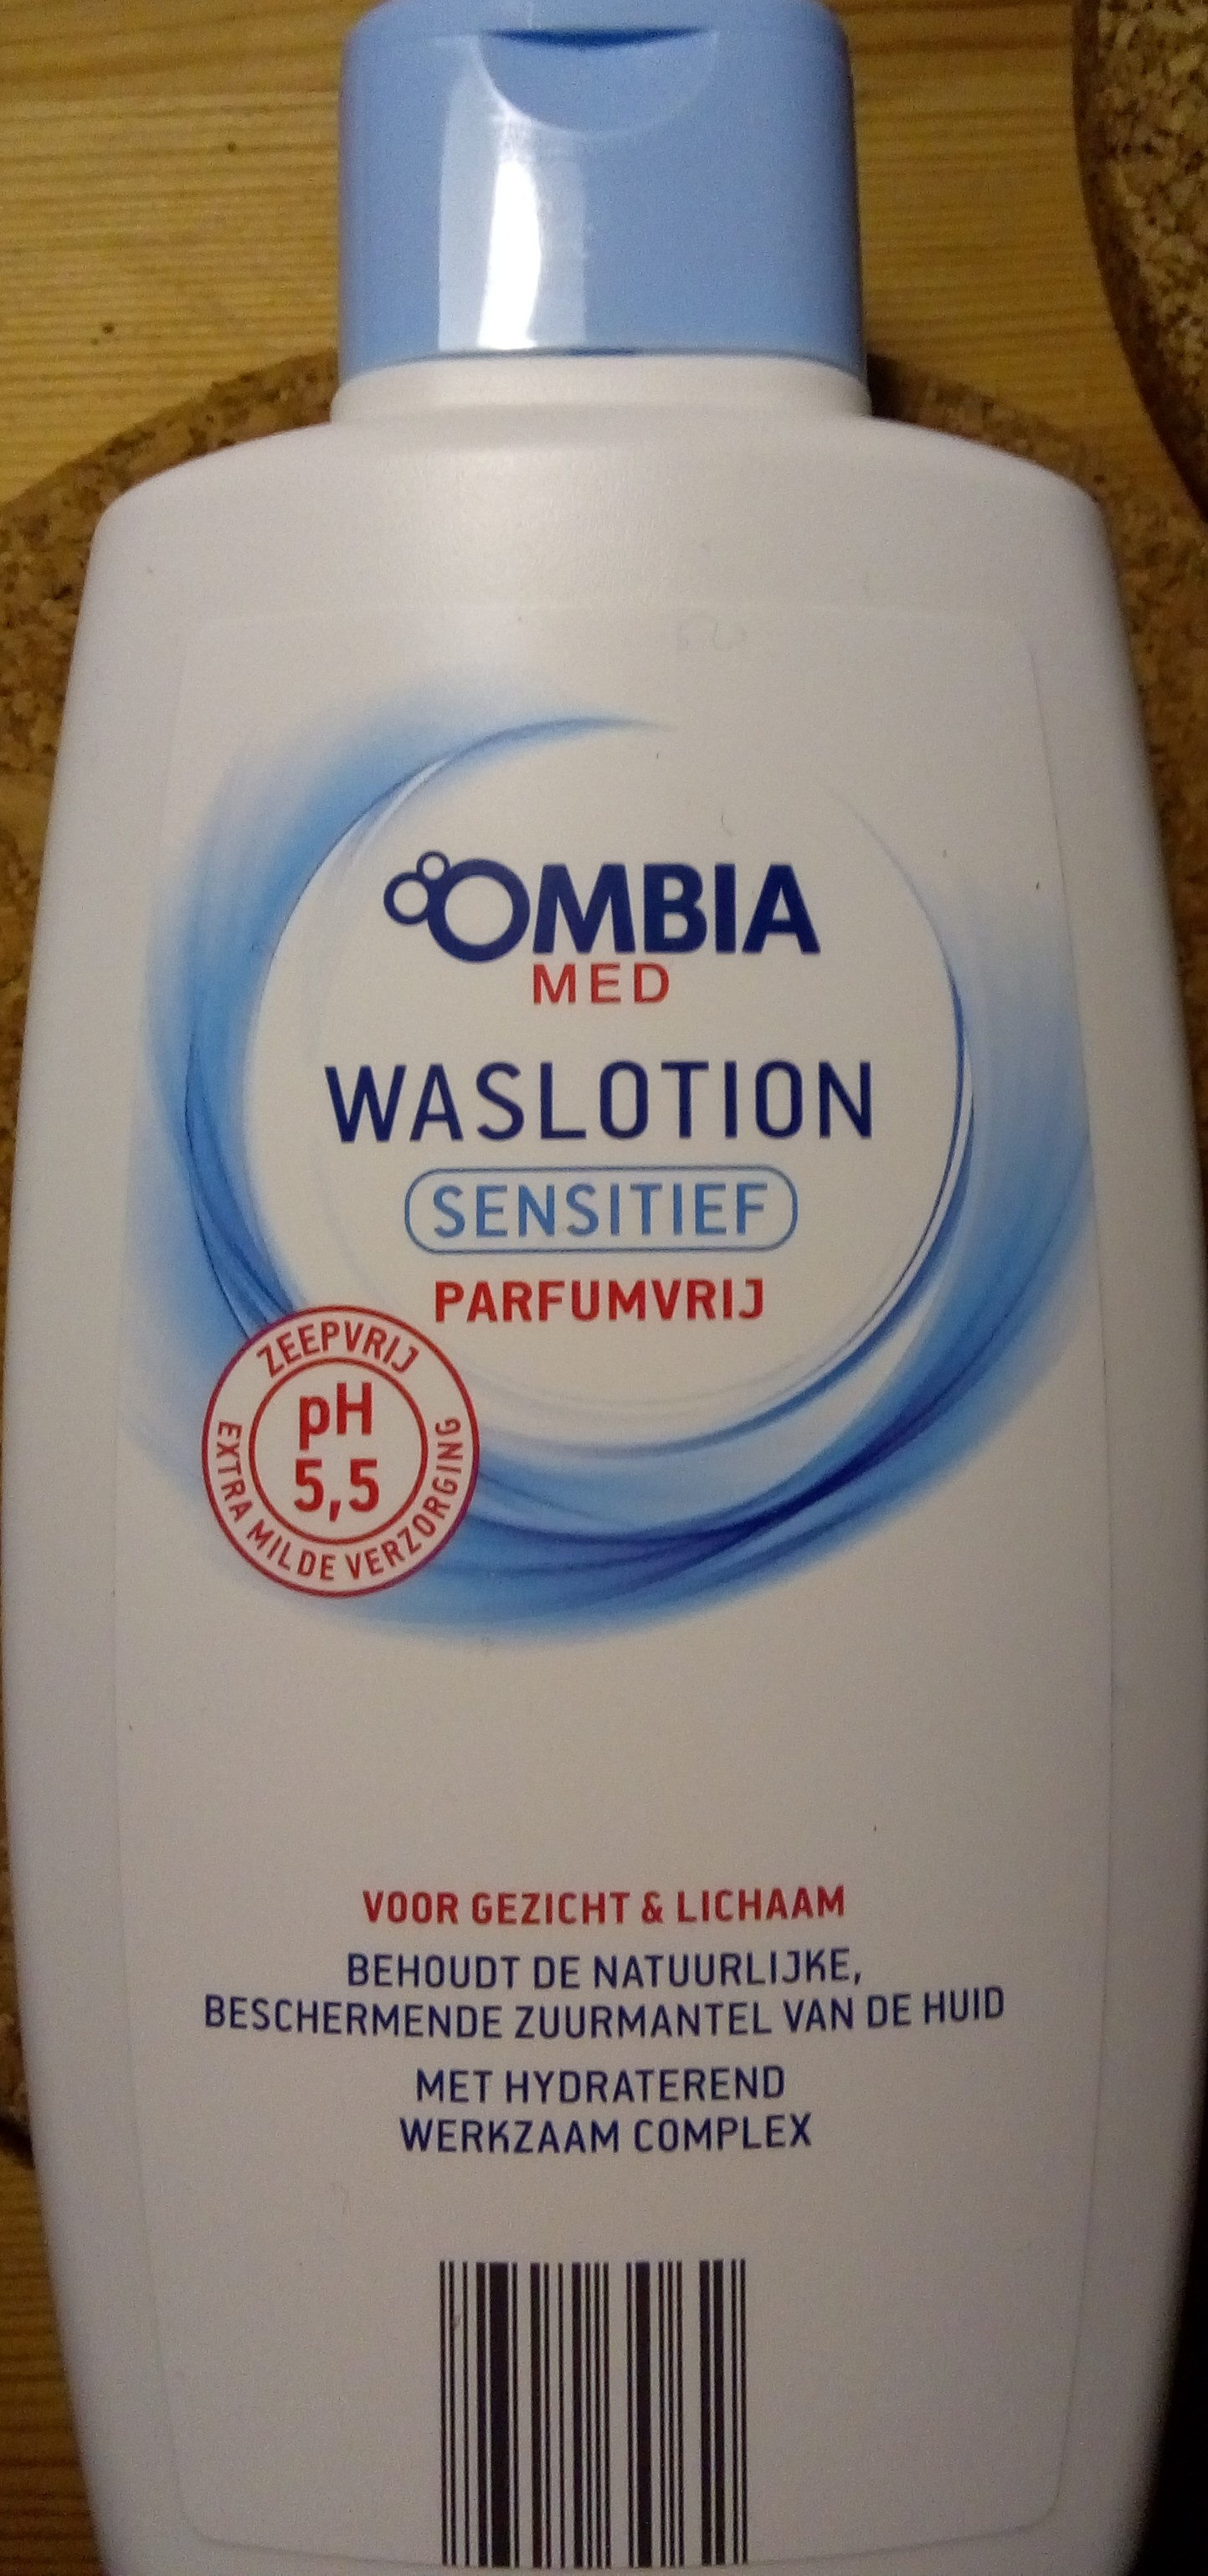 Ombia Med waslotion sensitief - Produto - nl